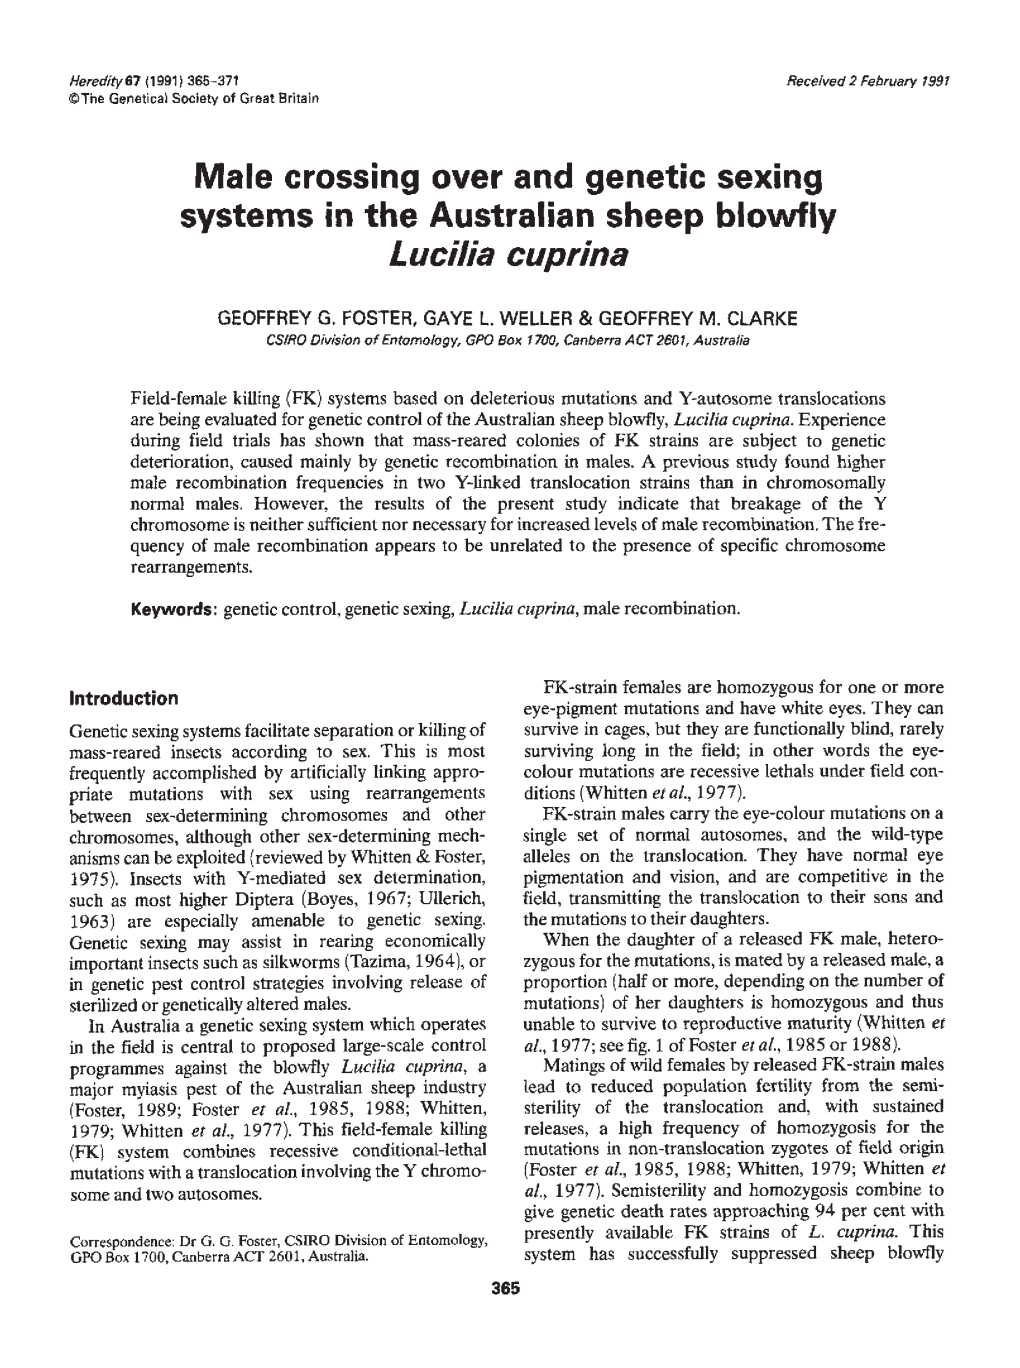 Systems in the Australian Sheep Blowfly Lucilia Cuprina